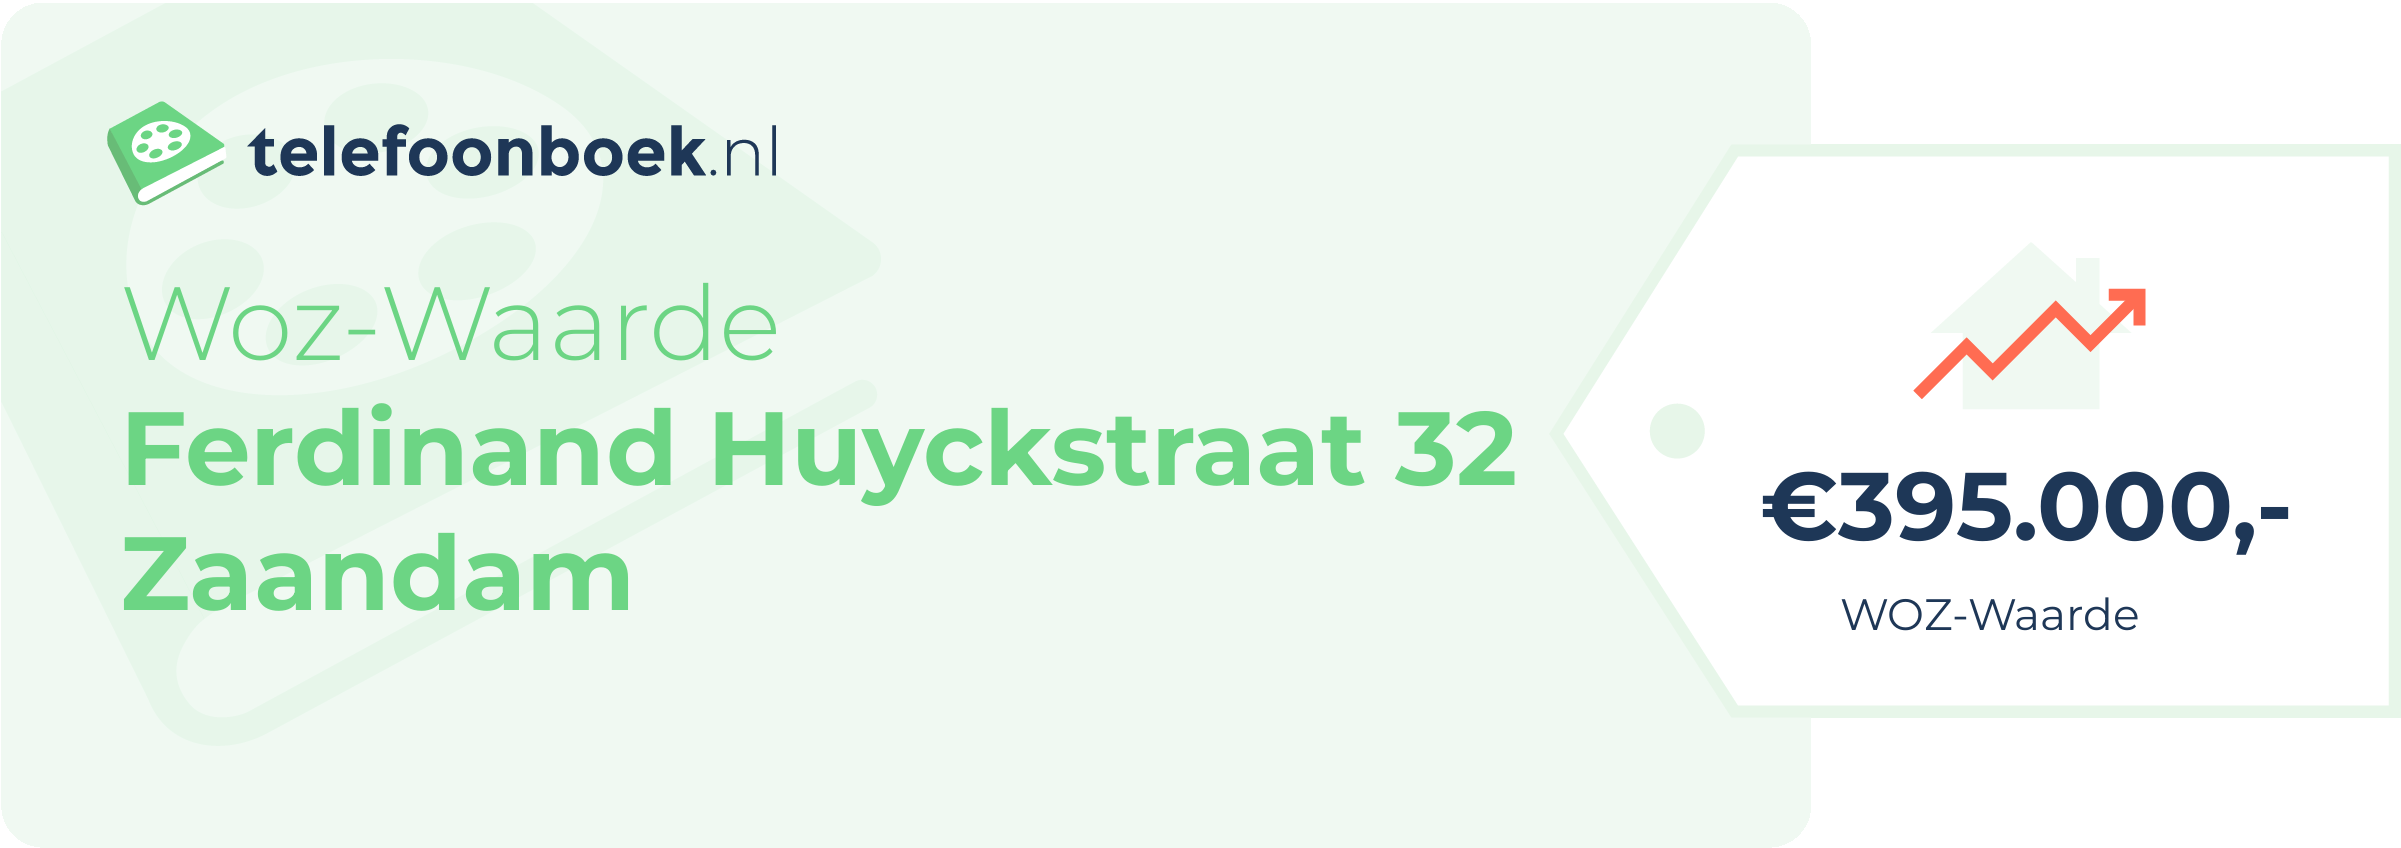 WOZ-waarde Ferdinand Huyckstraat 32 Zaandam